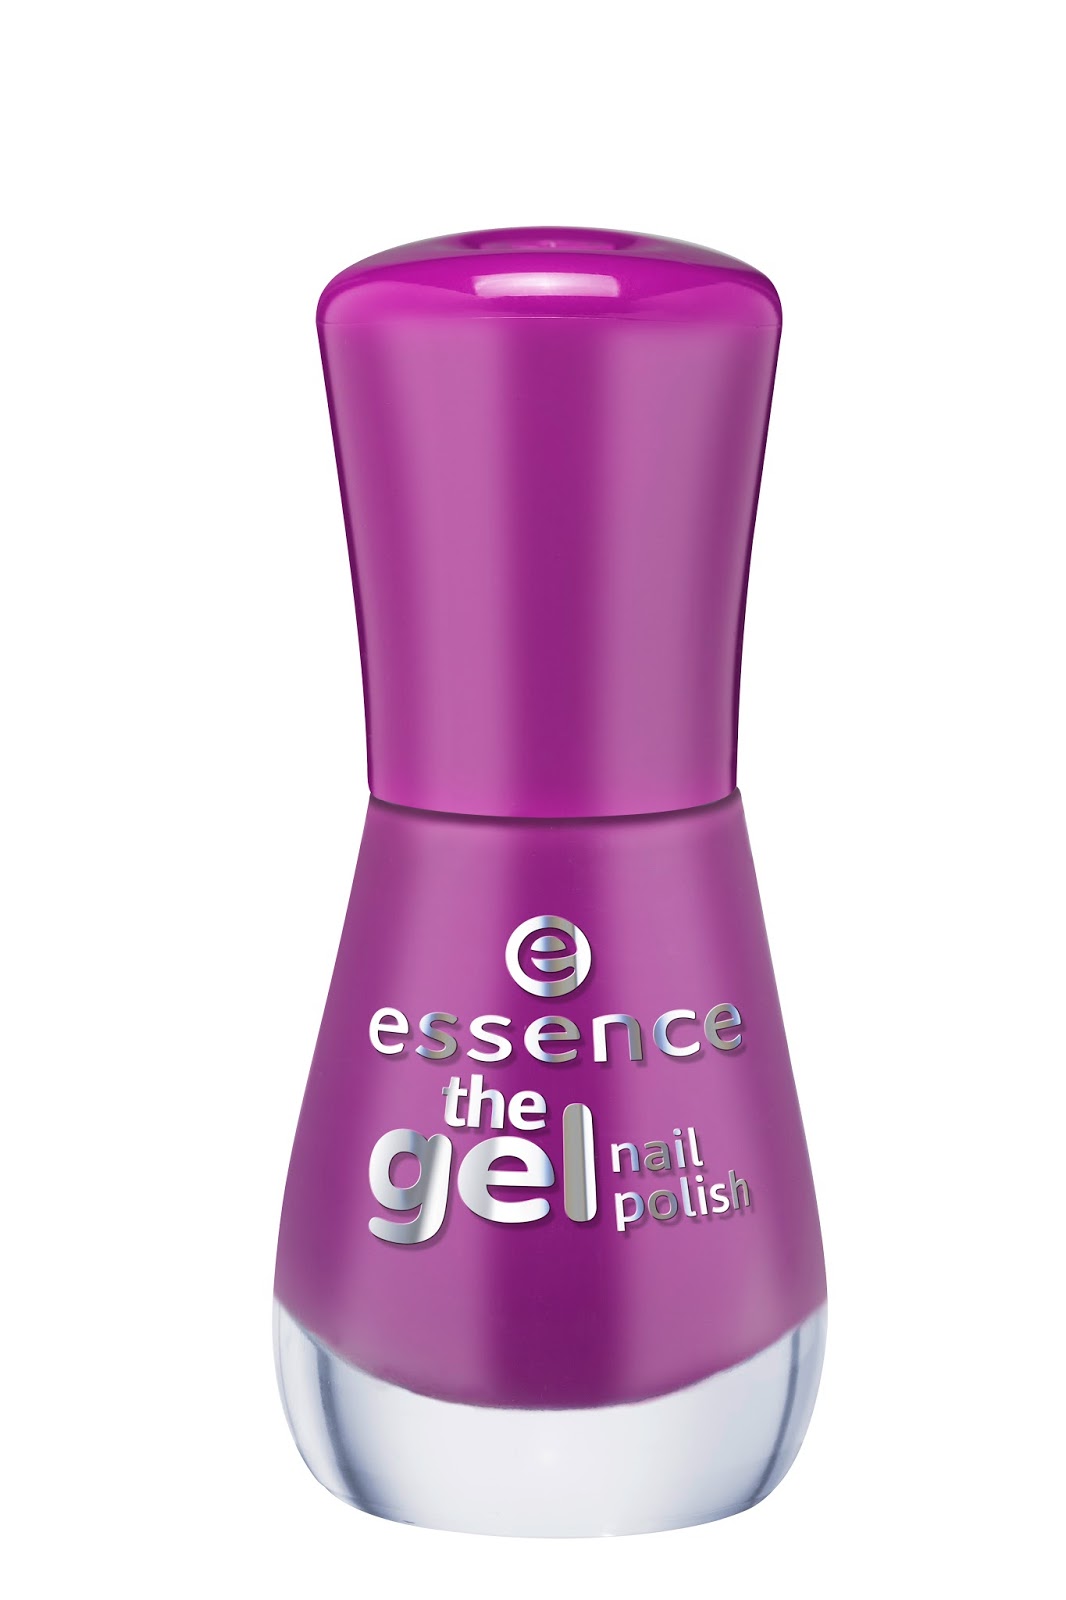 Essence the gel nail polish